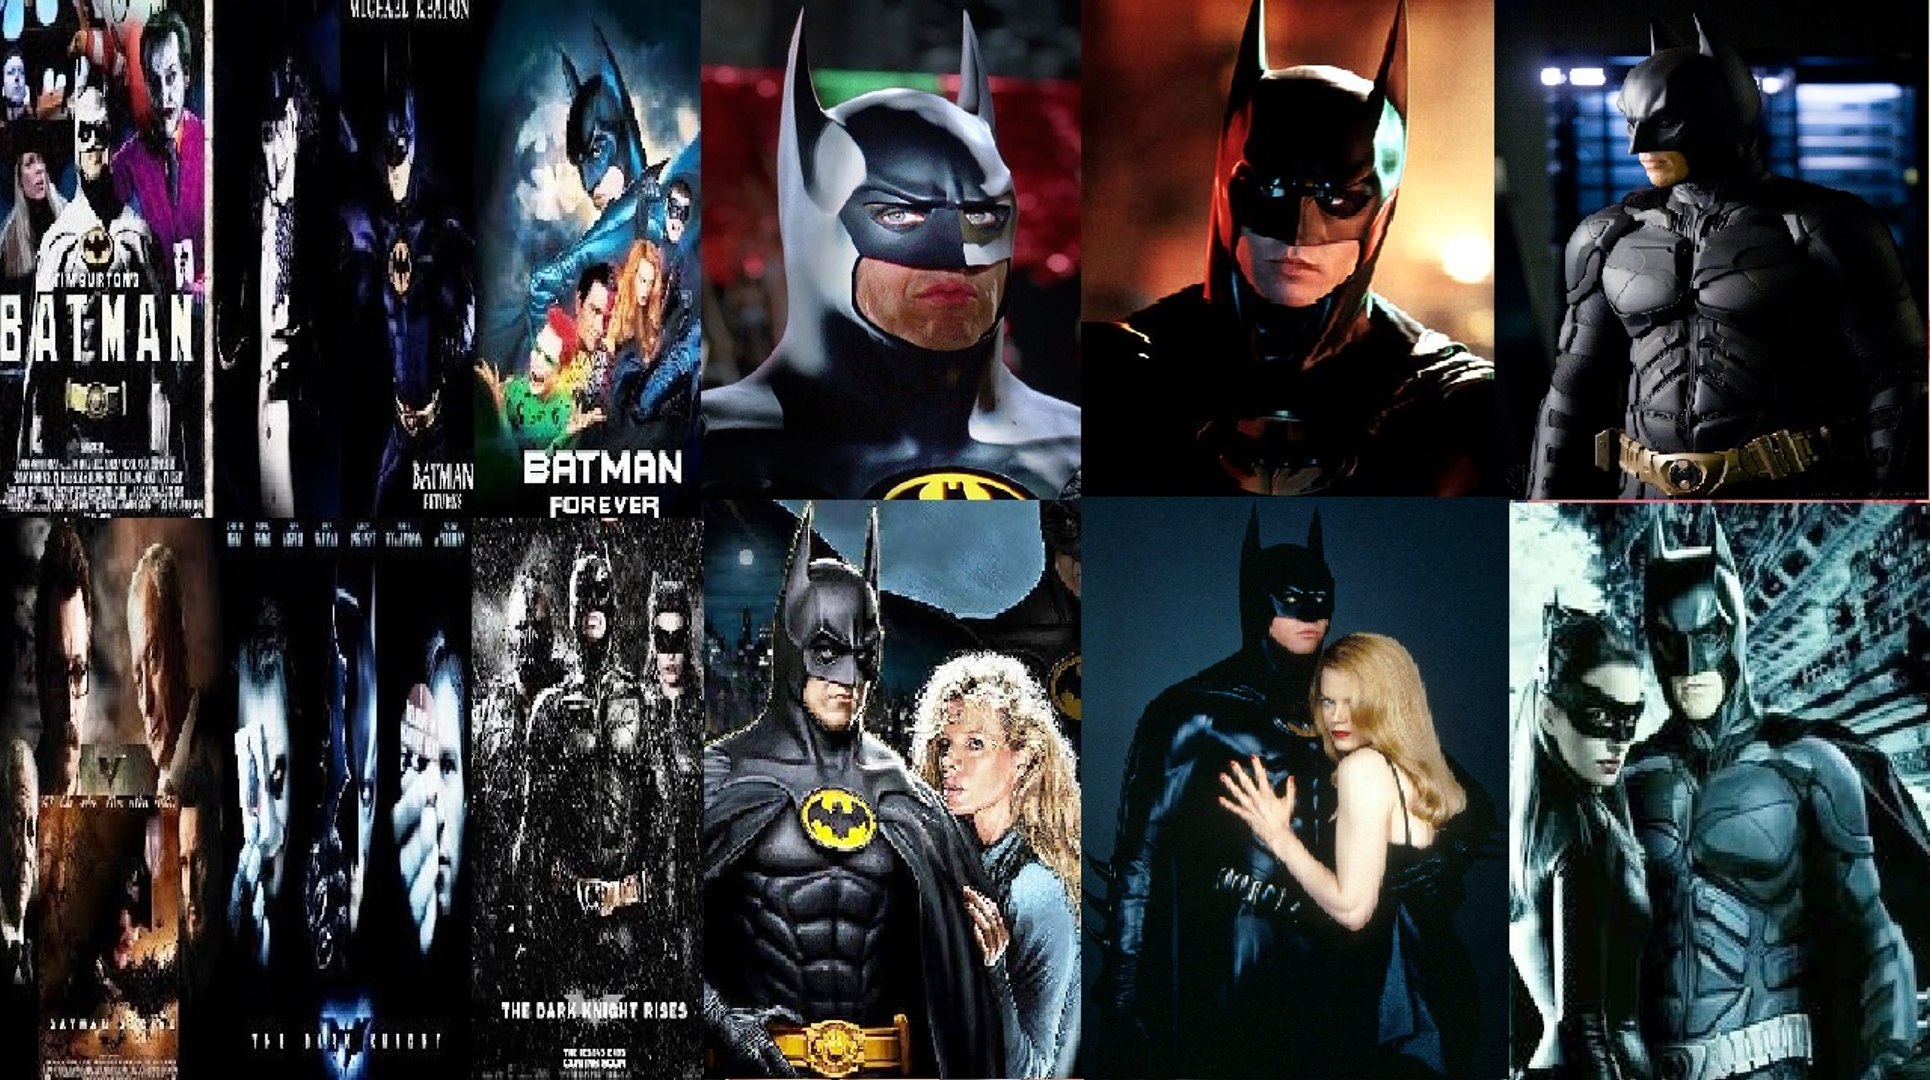 Batman Movies Best Scenes (Batman, Batman Returns, Batman Forever, Batman  Begins, The Dark Knight, The Dark Knight Rises) Mashup Mix Video ft  Christian Bale, Val Kilmer, Michael Keaton | Batman Tribute |